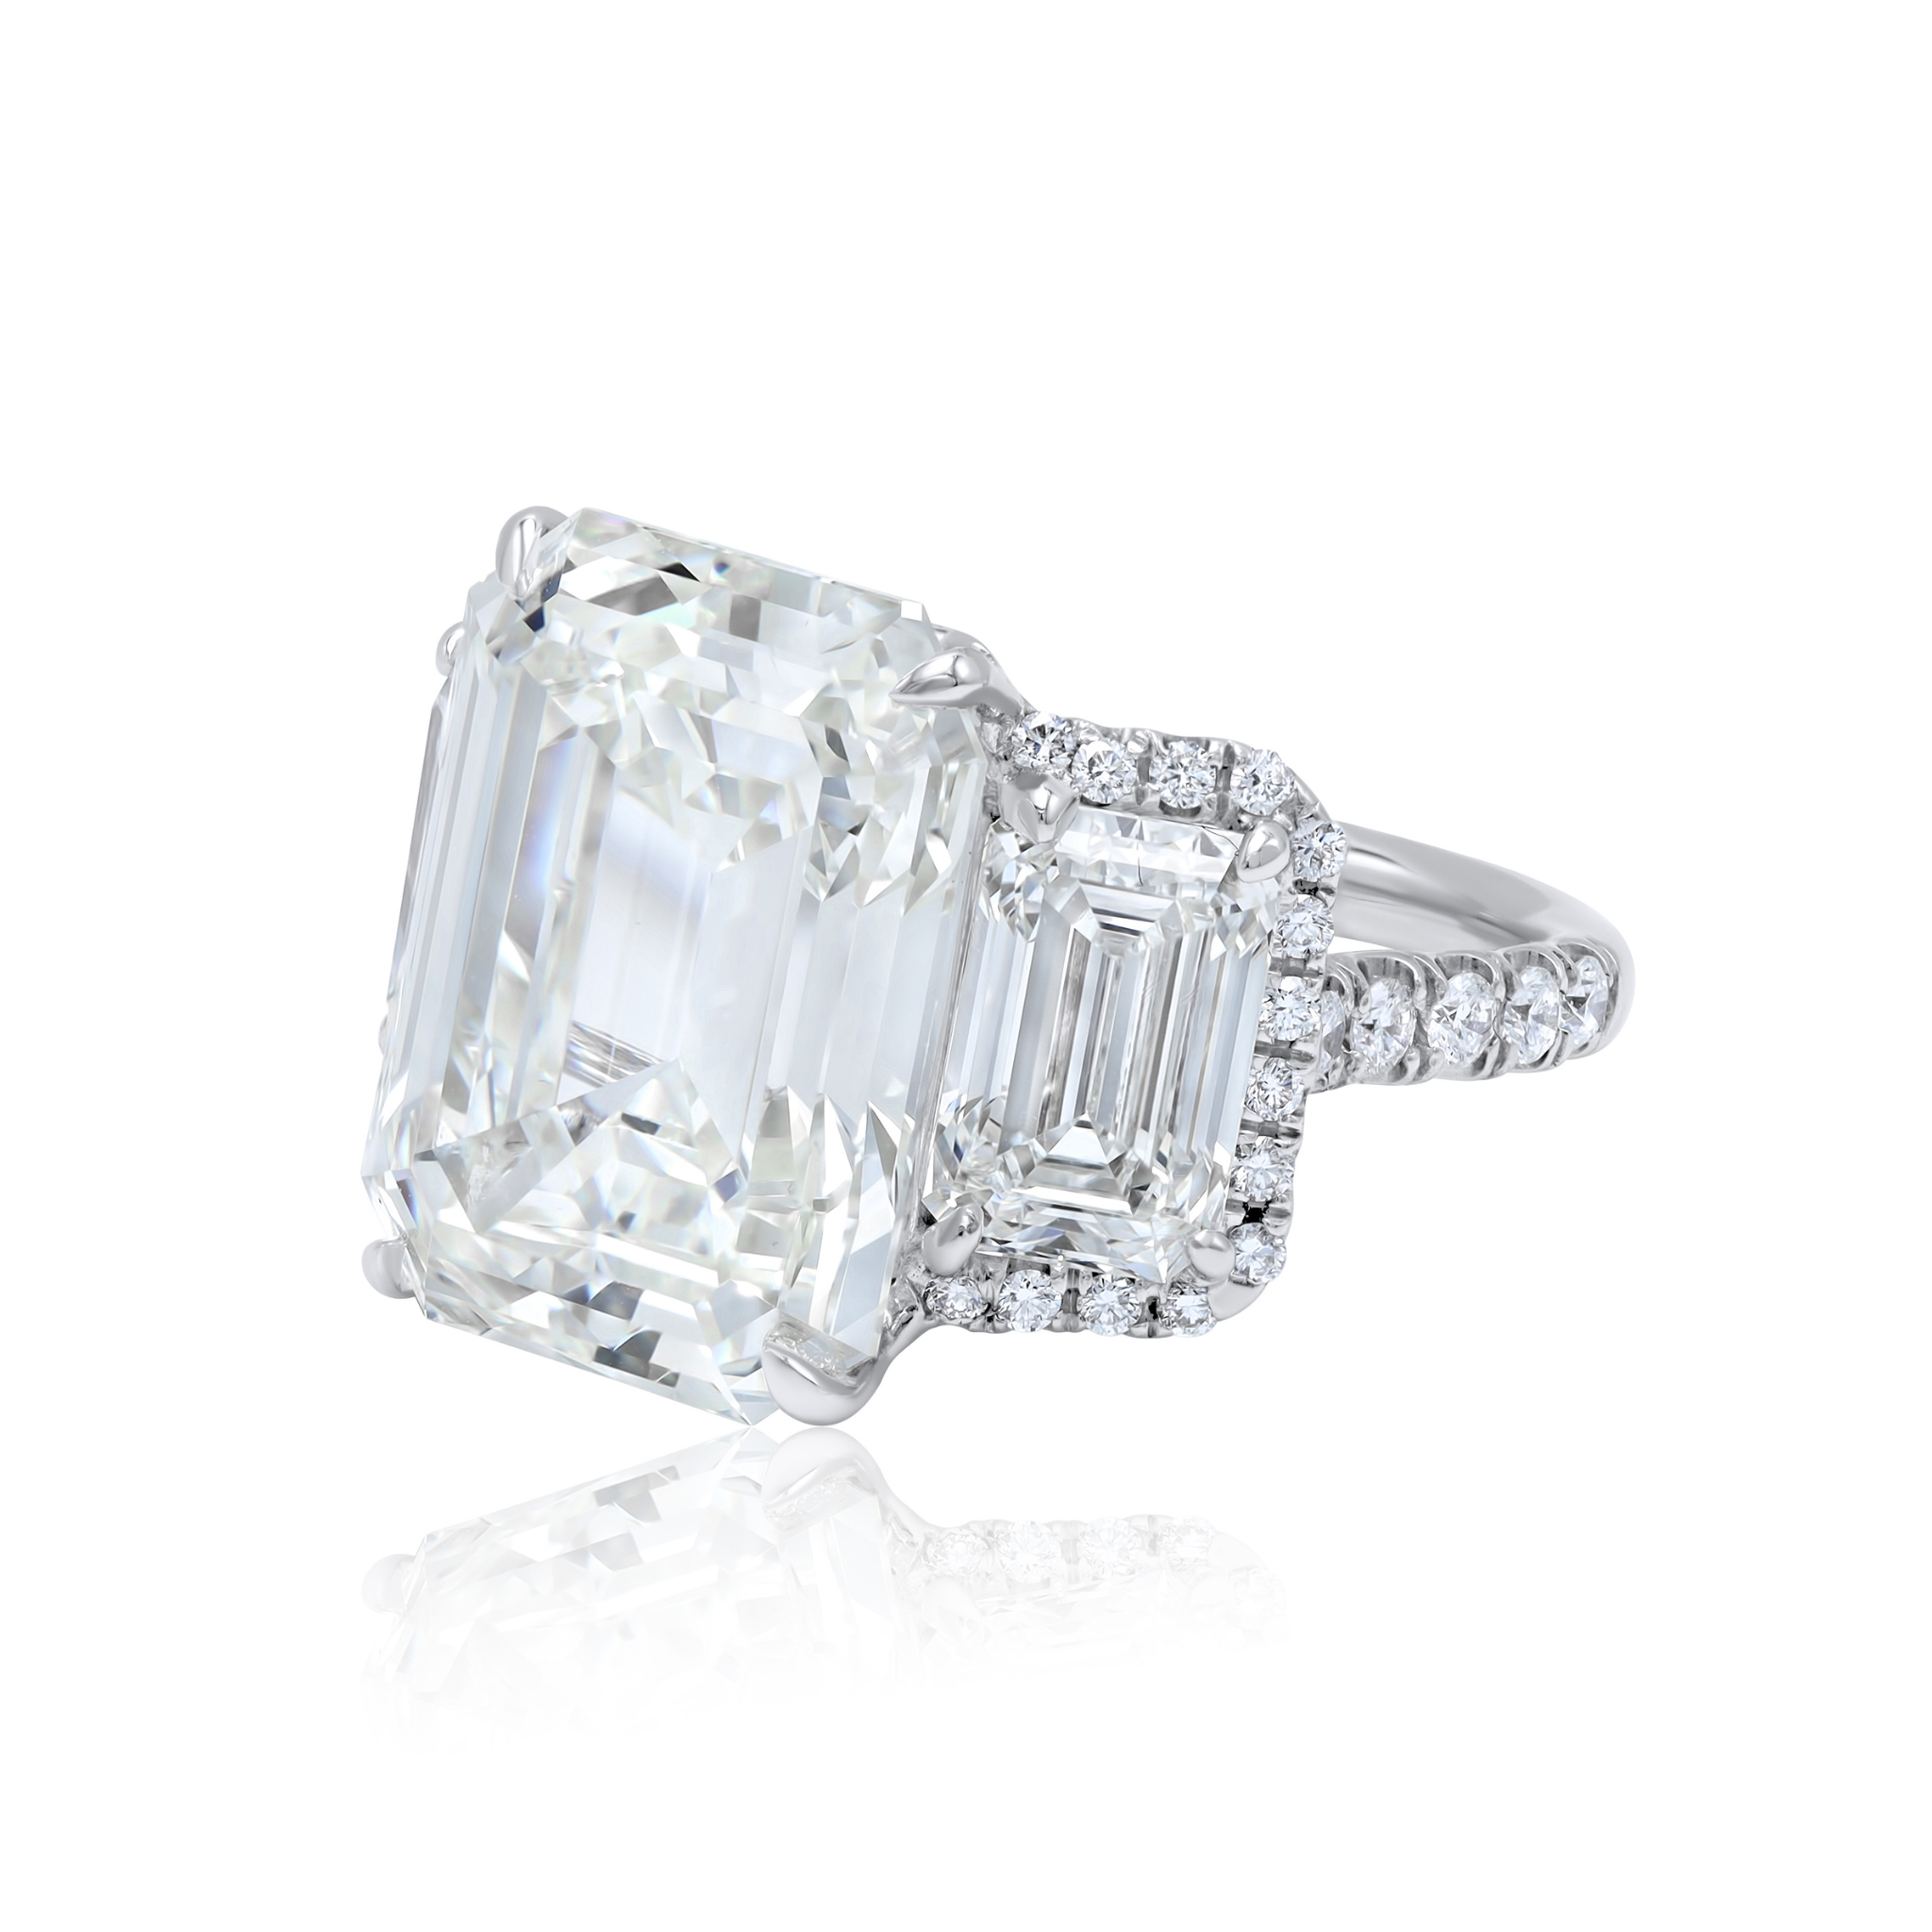 2.44ct Three-Stone Emerald Cut Diamond Ring.jpg